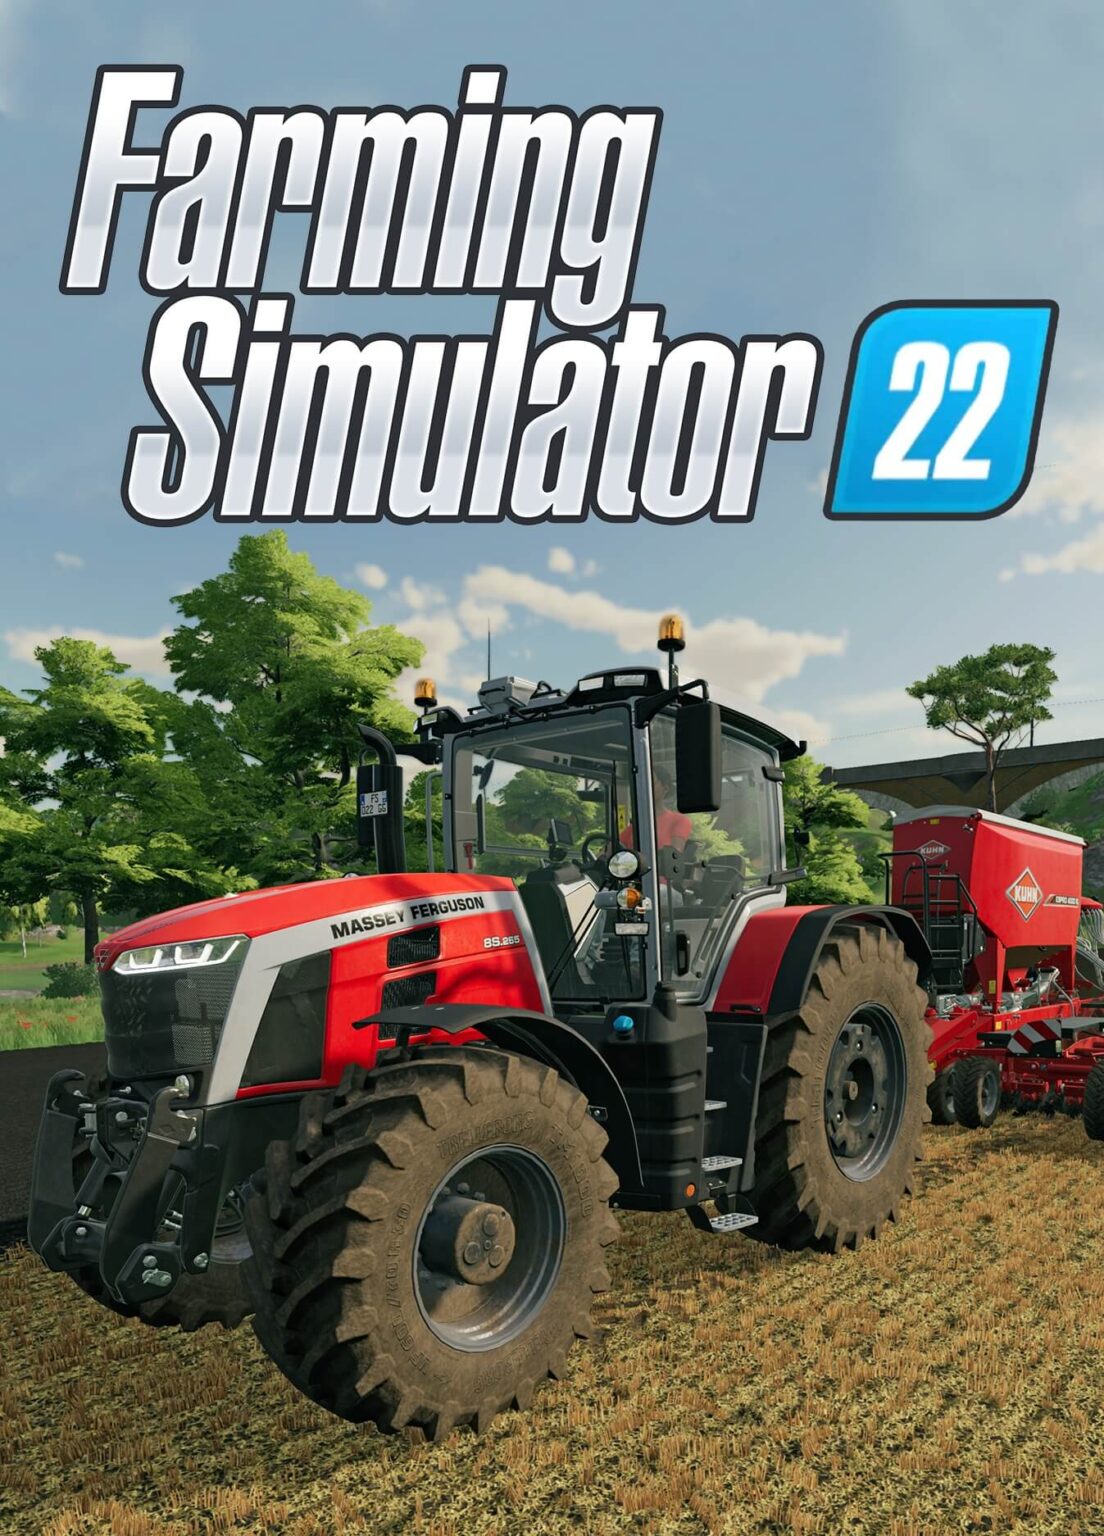 download free farming simulator 22